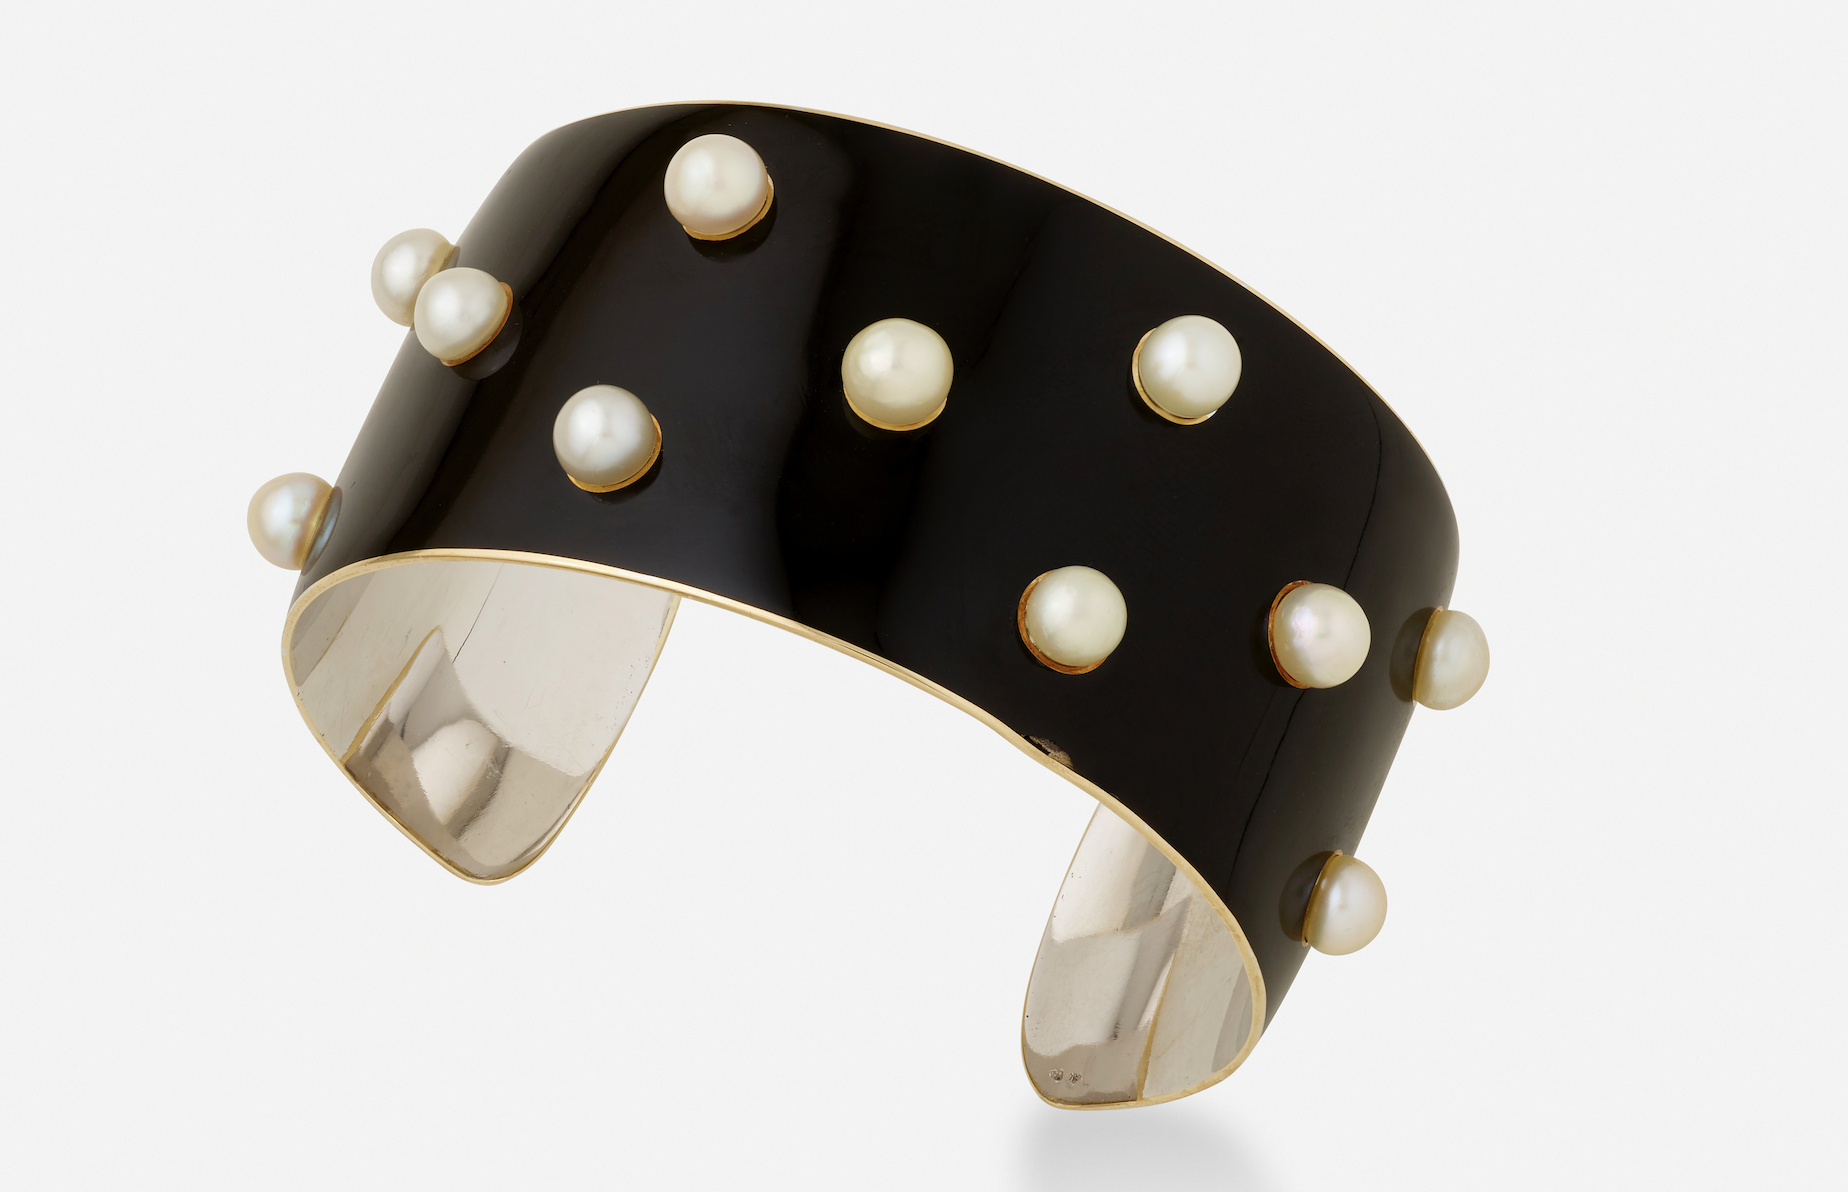 Rene Boivin pearl cuff bracelet, est. $7,000-$9,000. Image courtesy of Rago/Wright/LAMA